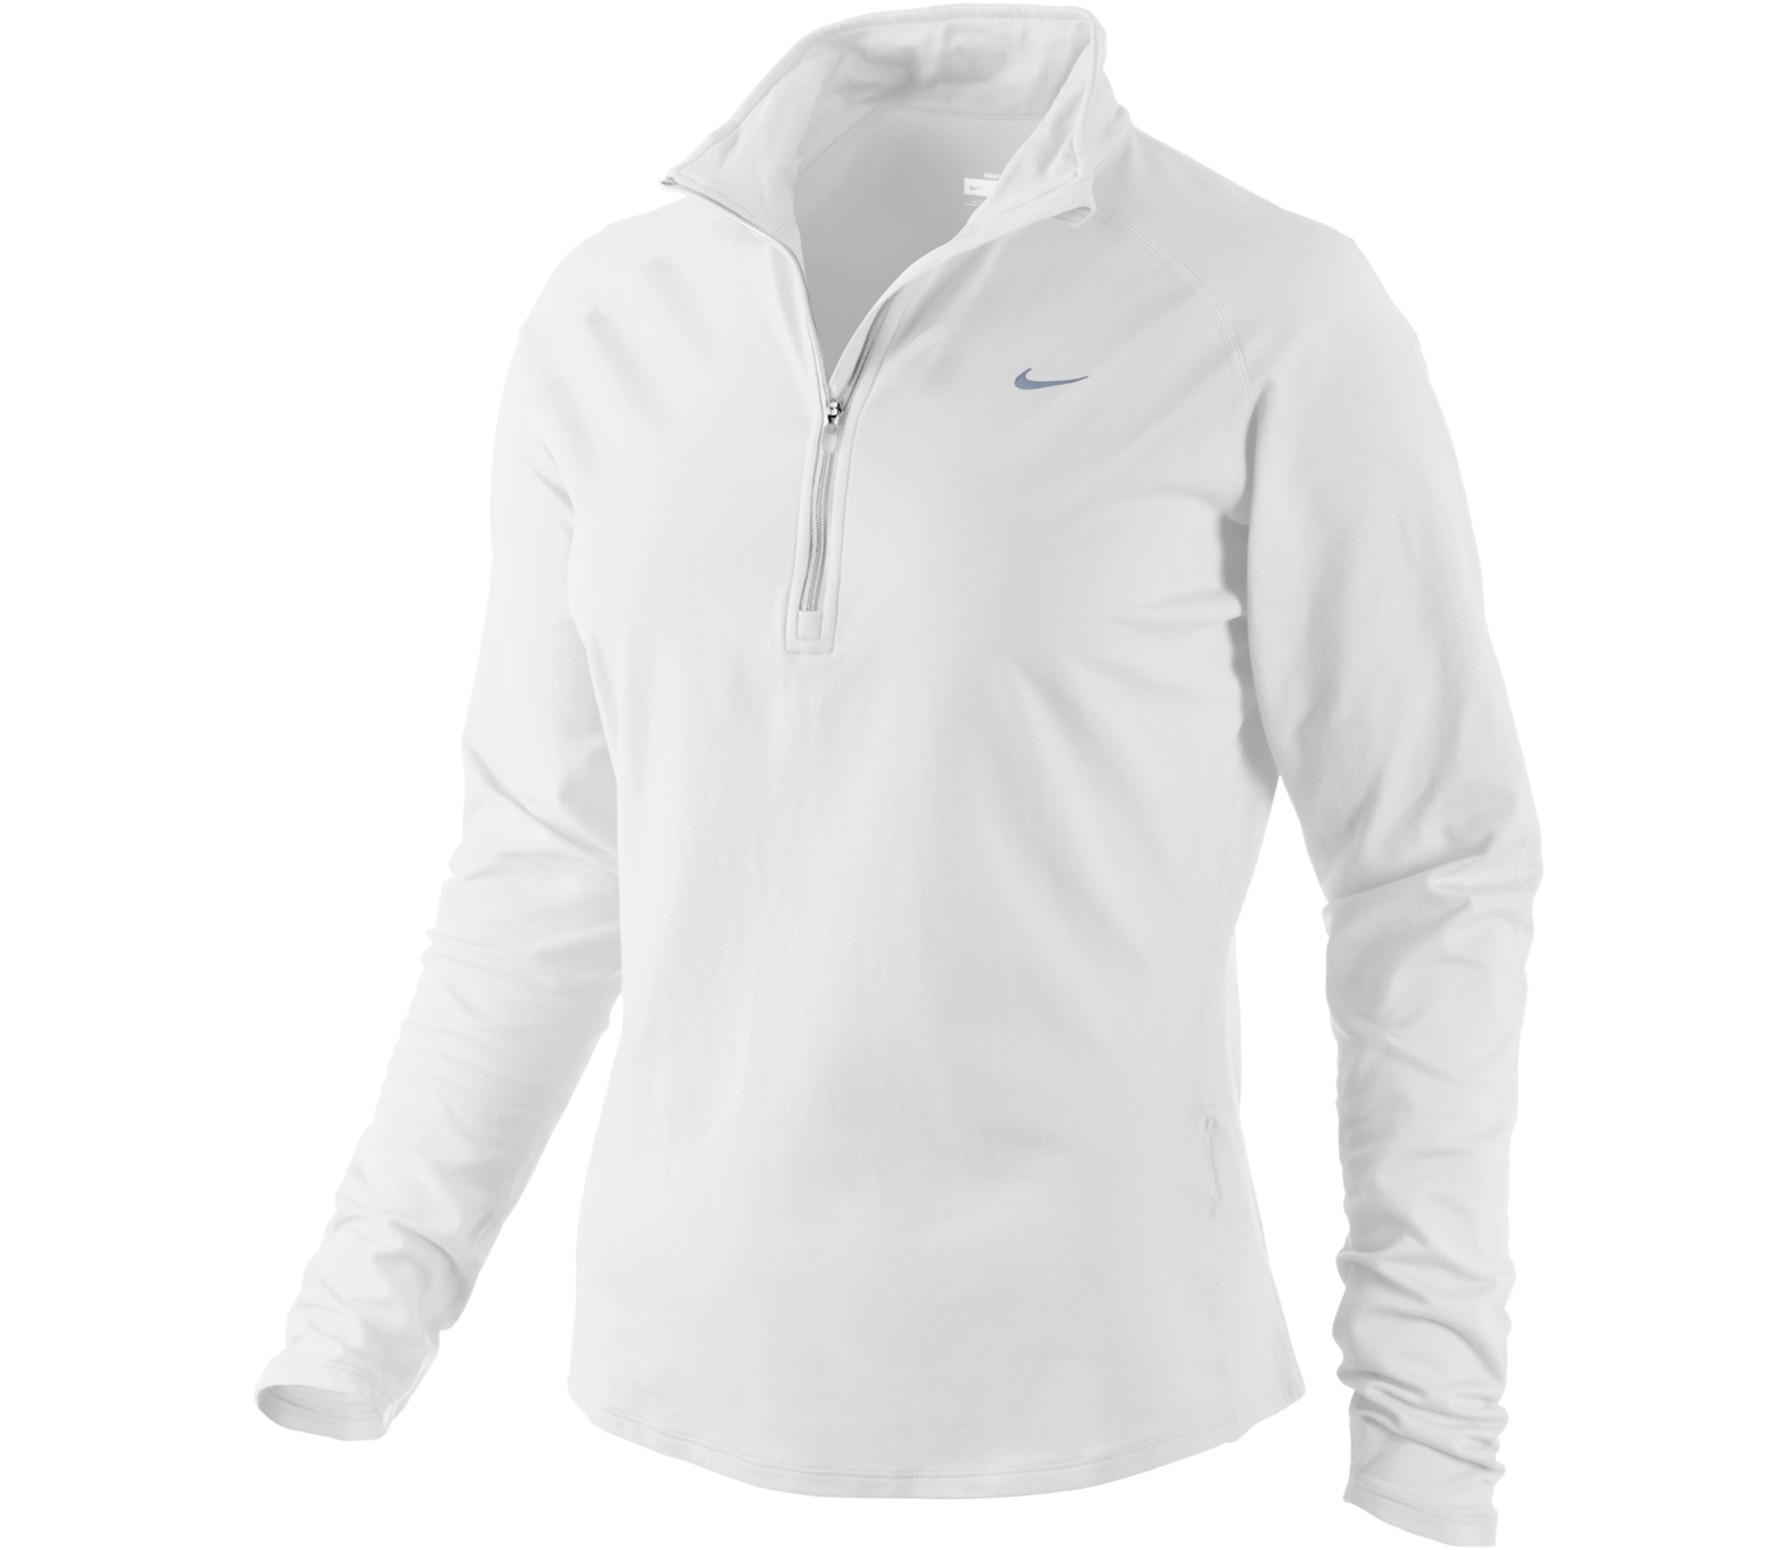 Foto Nike - Camiseta de Running Mujer Element 1/2 ZIP blanco - SP13